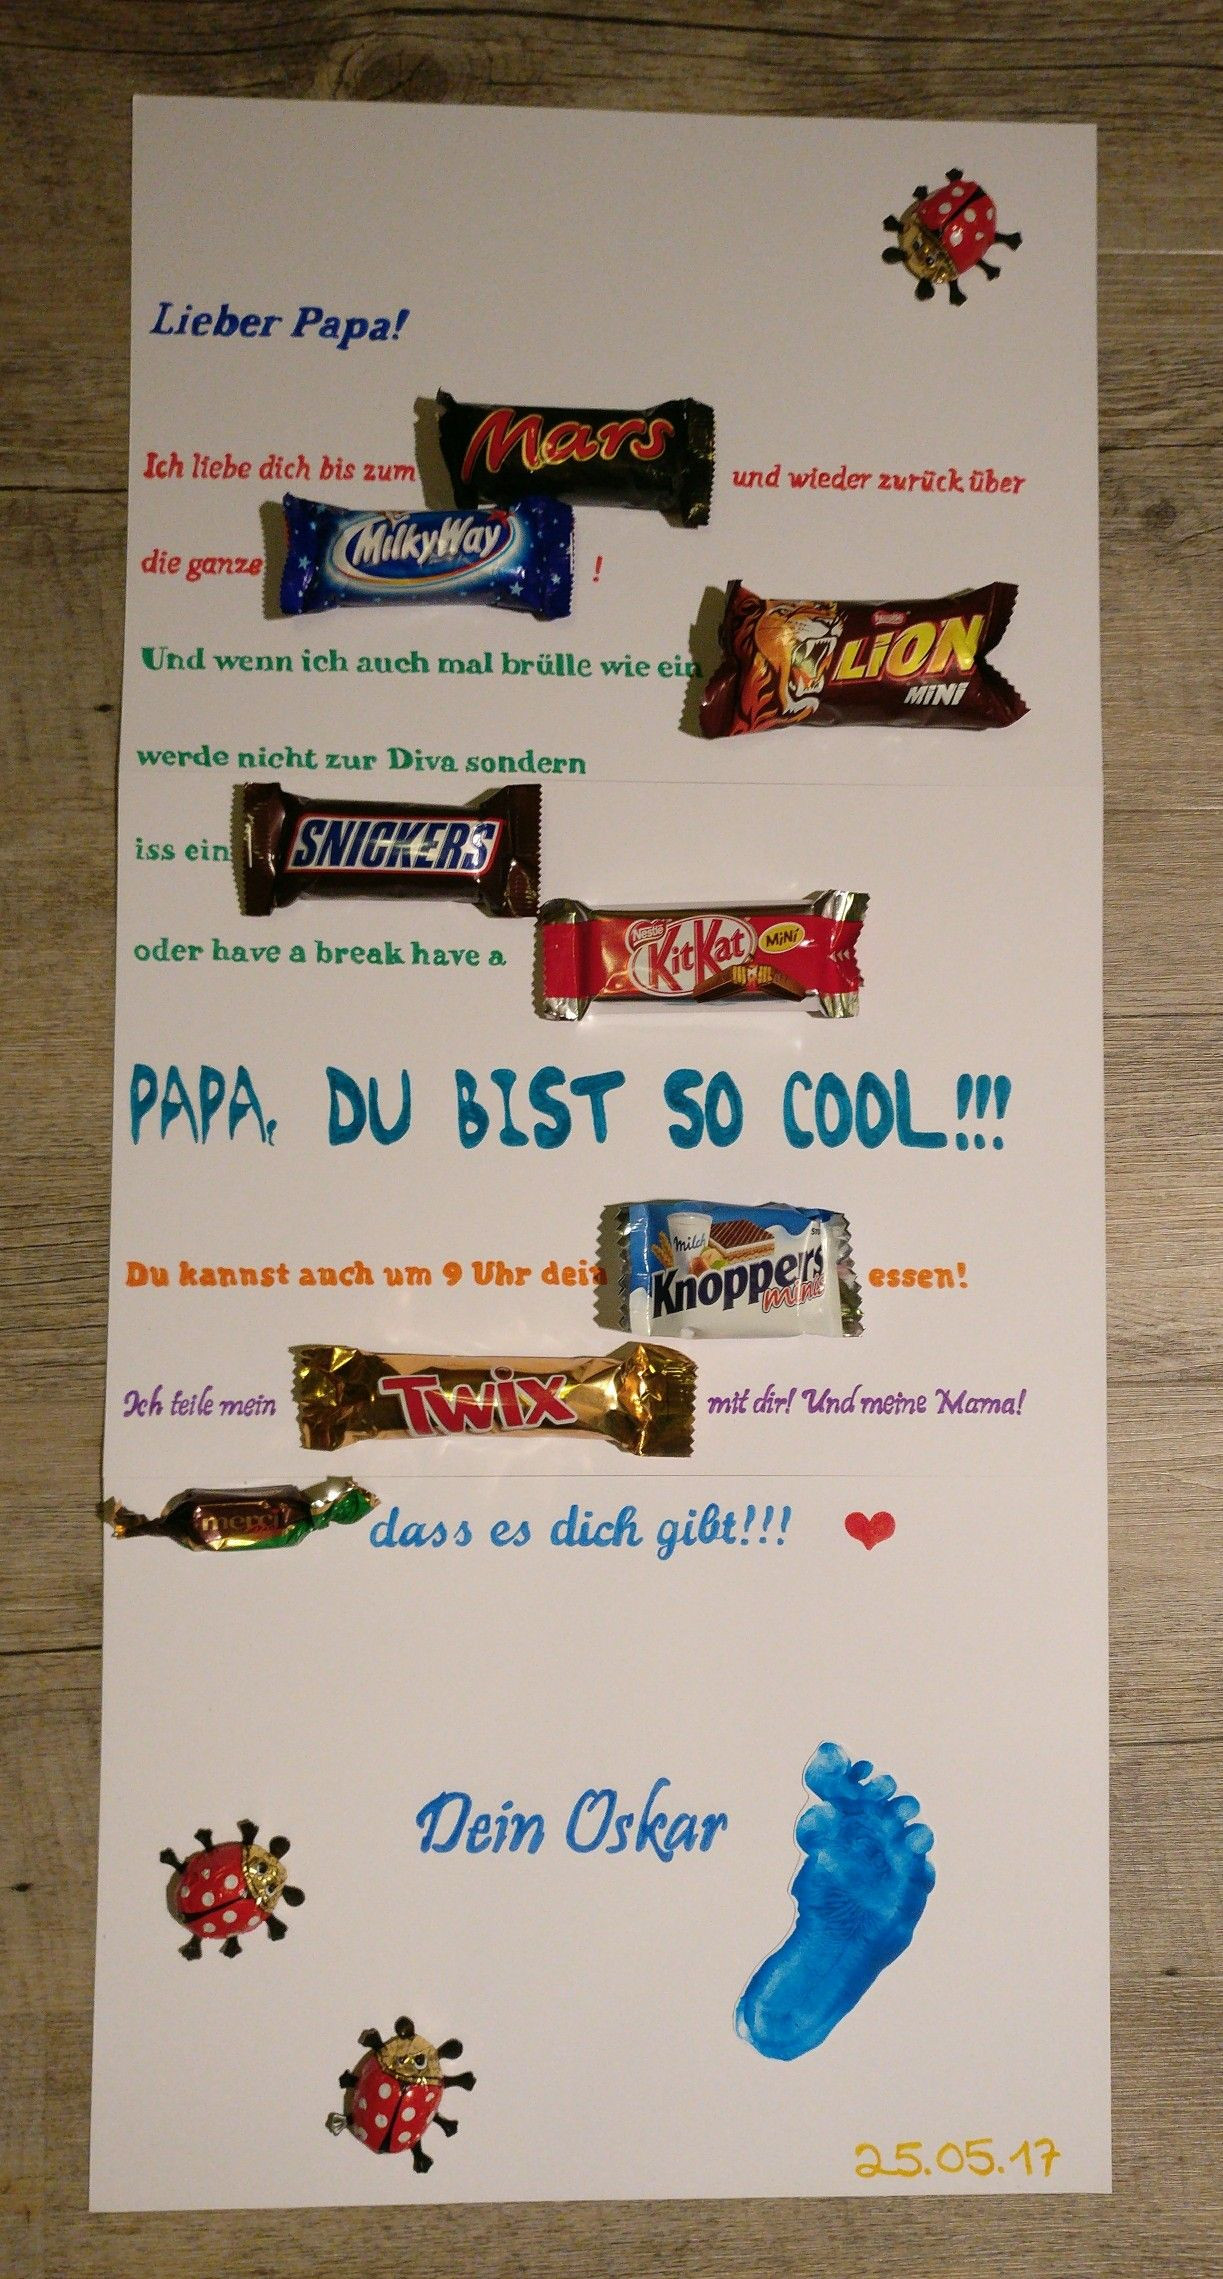 Geburtstagsgeschenk Für Vater
 Vatertag Mars Milky Way Lion Snickers Kit Kat Knoppers